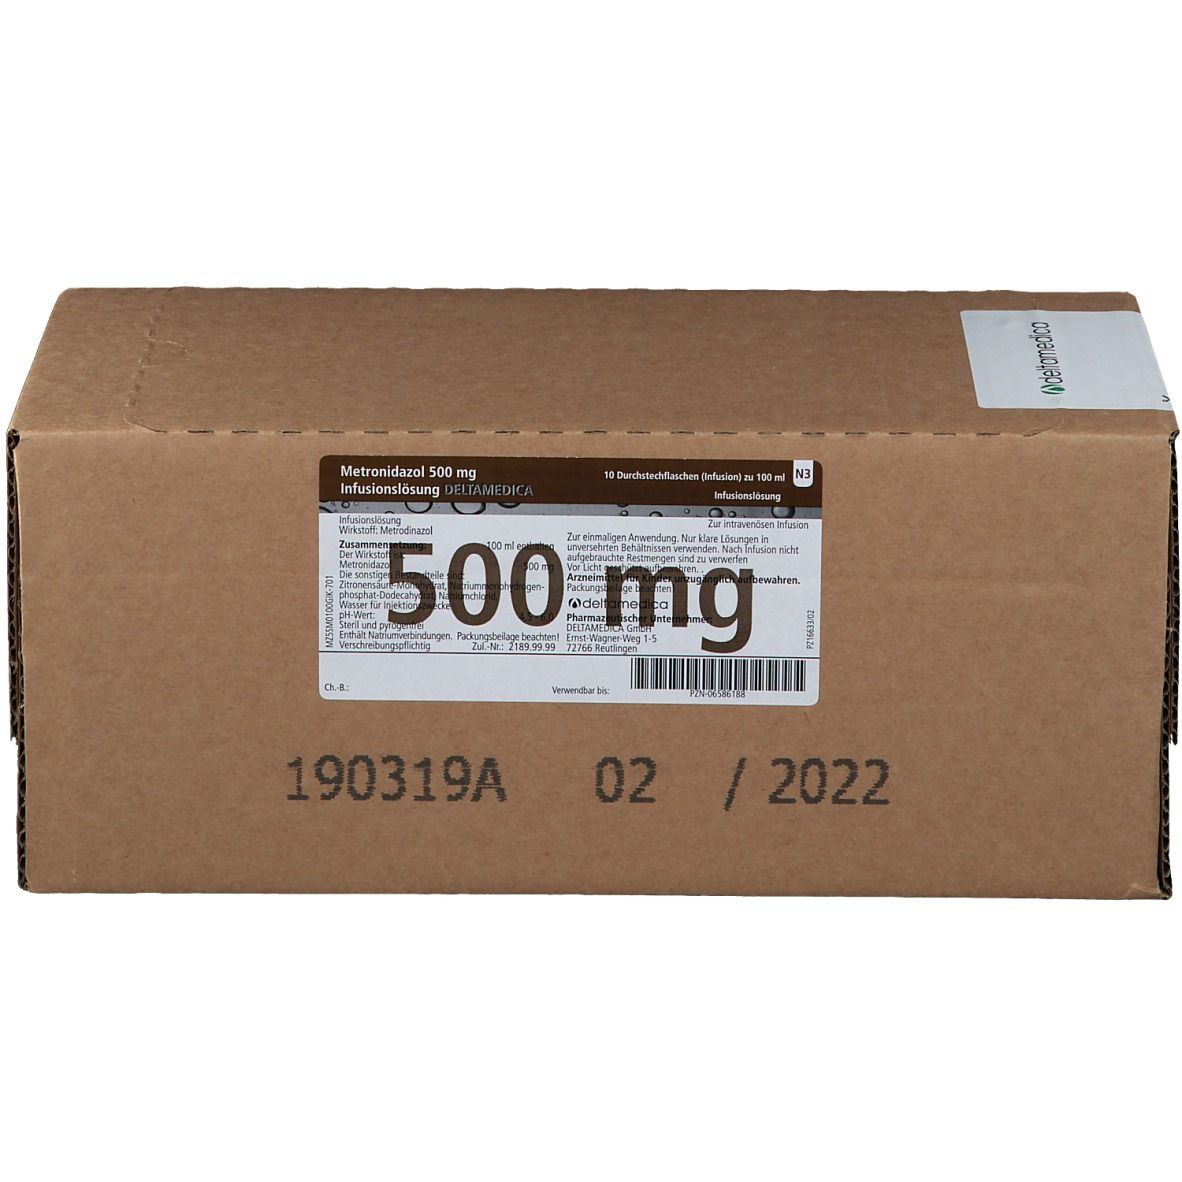 Metronidazol 500 mg Infusionslösung DELTAMEDICA